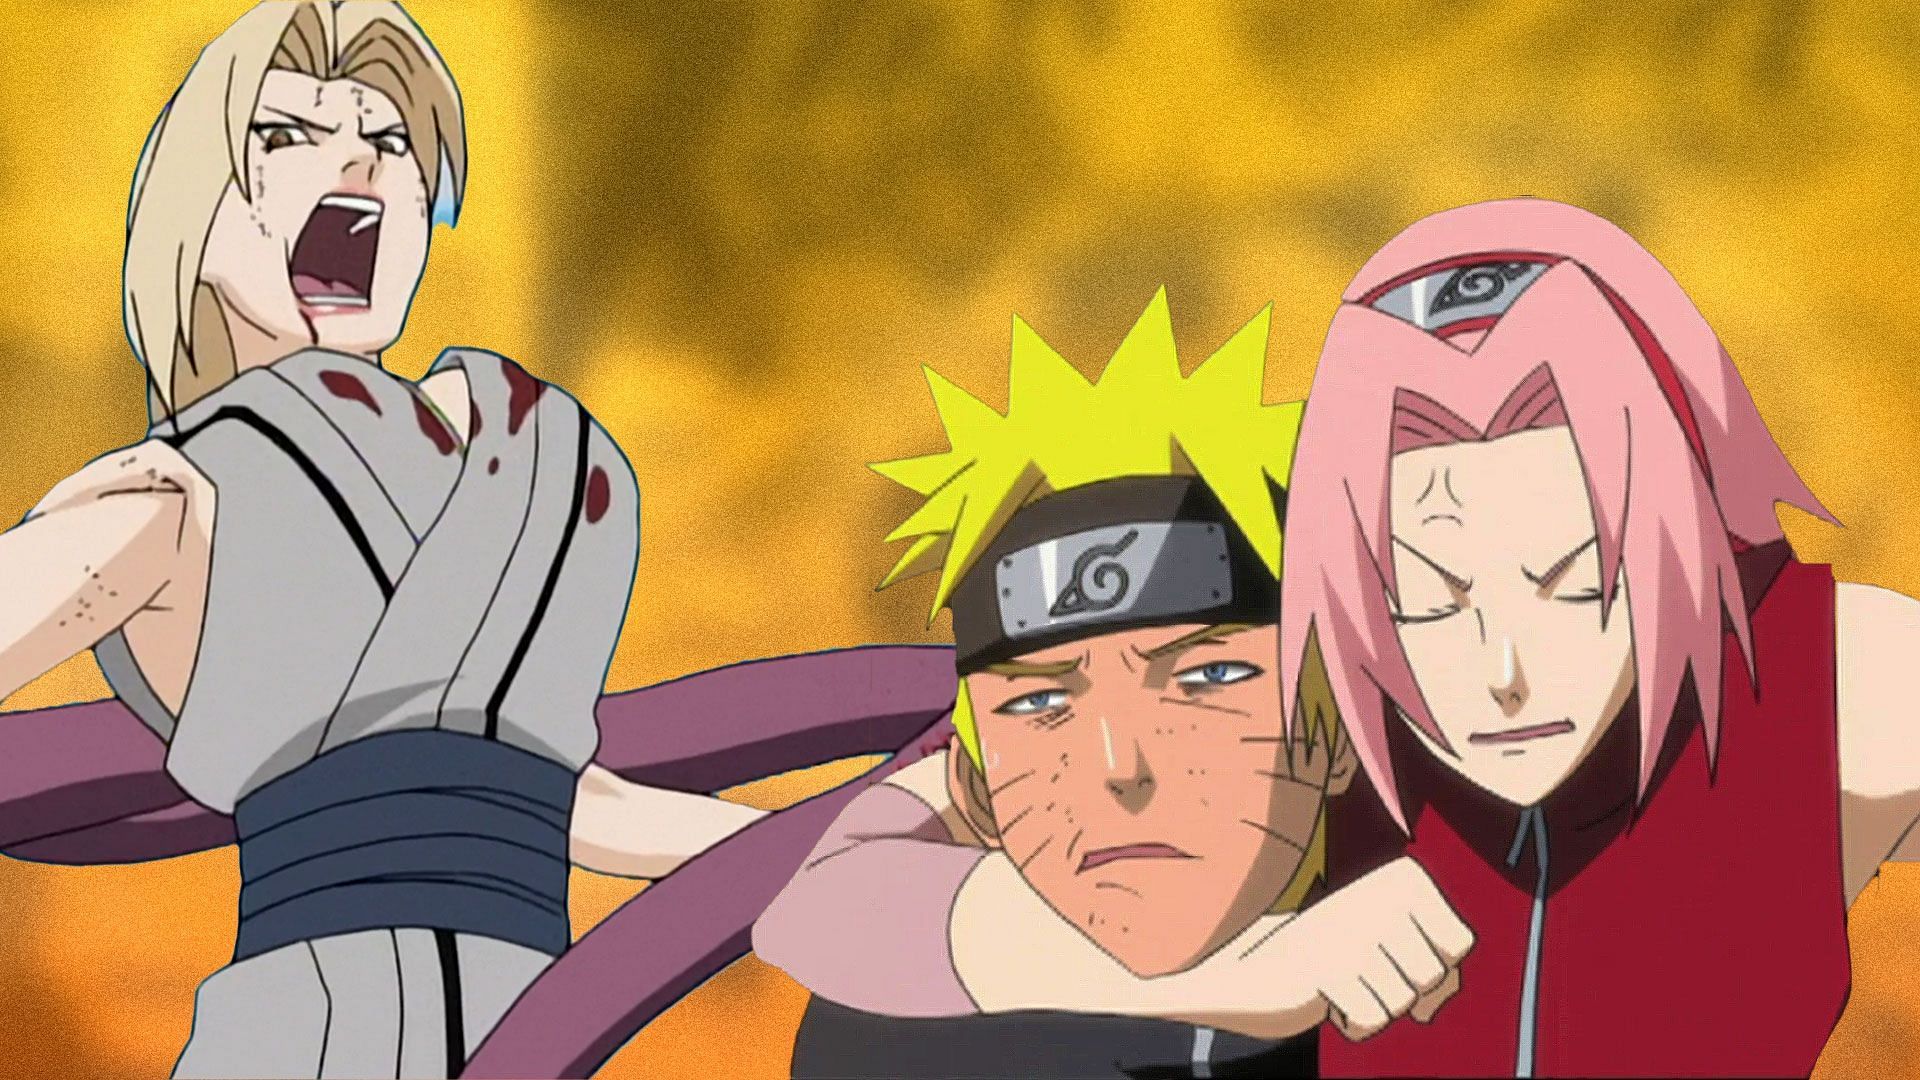 Naruto was often portrayed as goofy in the anime series (Image via Studio Pierrot)